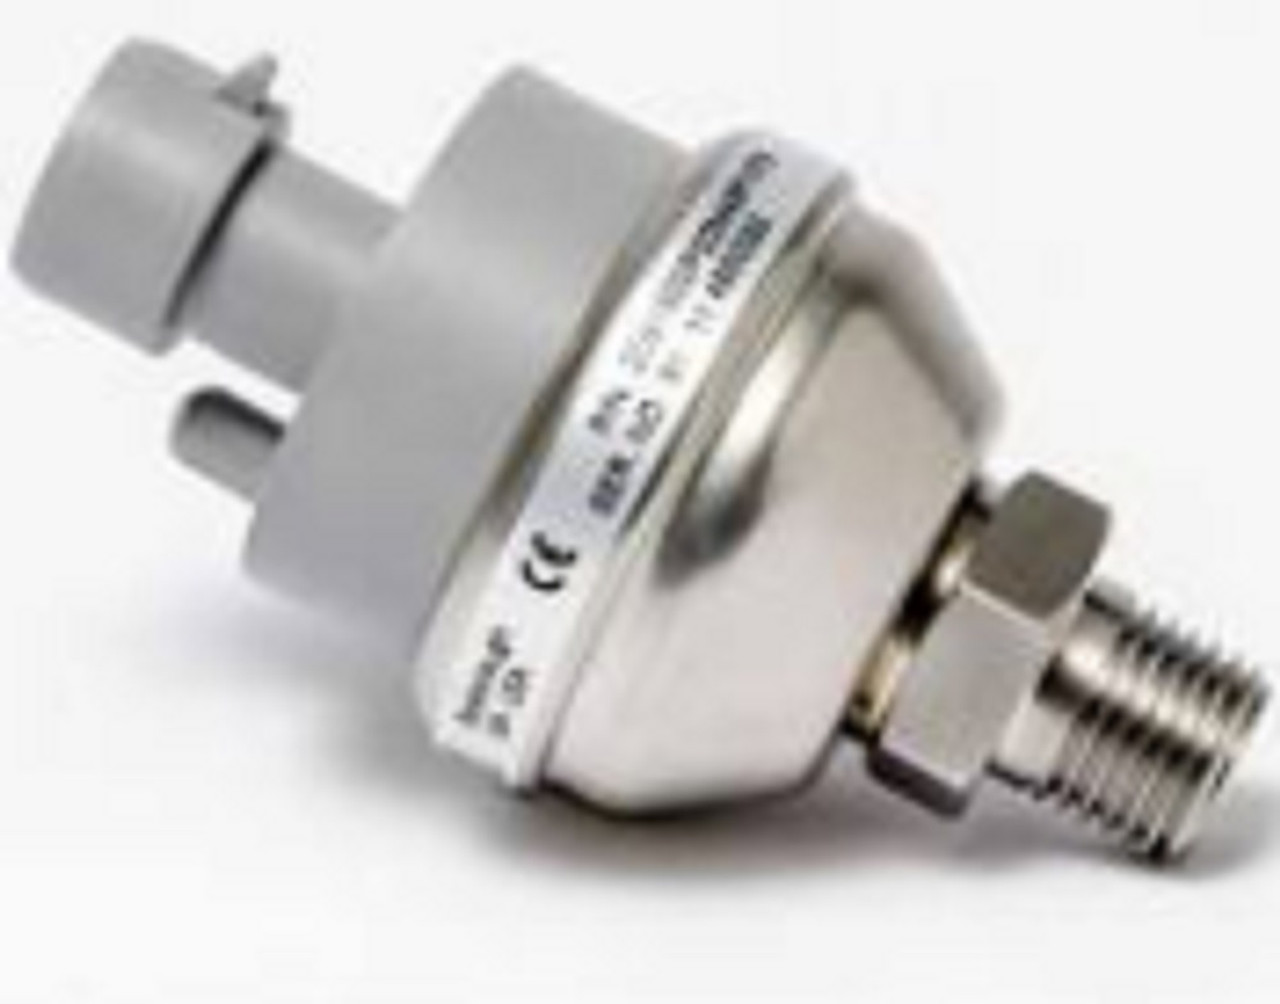 Setra 2091002PG2M2820 209 Pressure Transducer, 0-2 PSIG Range, 9-30 VDC Excit [New]